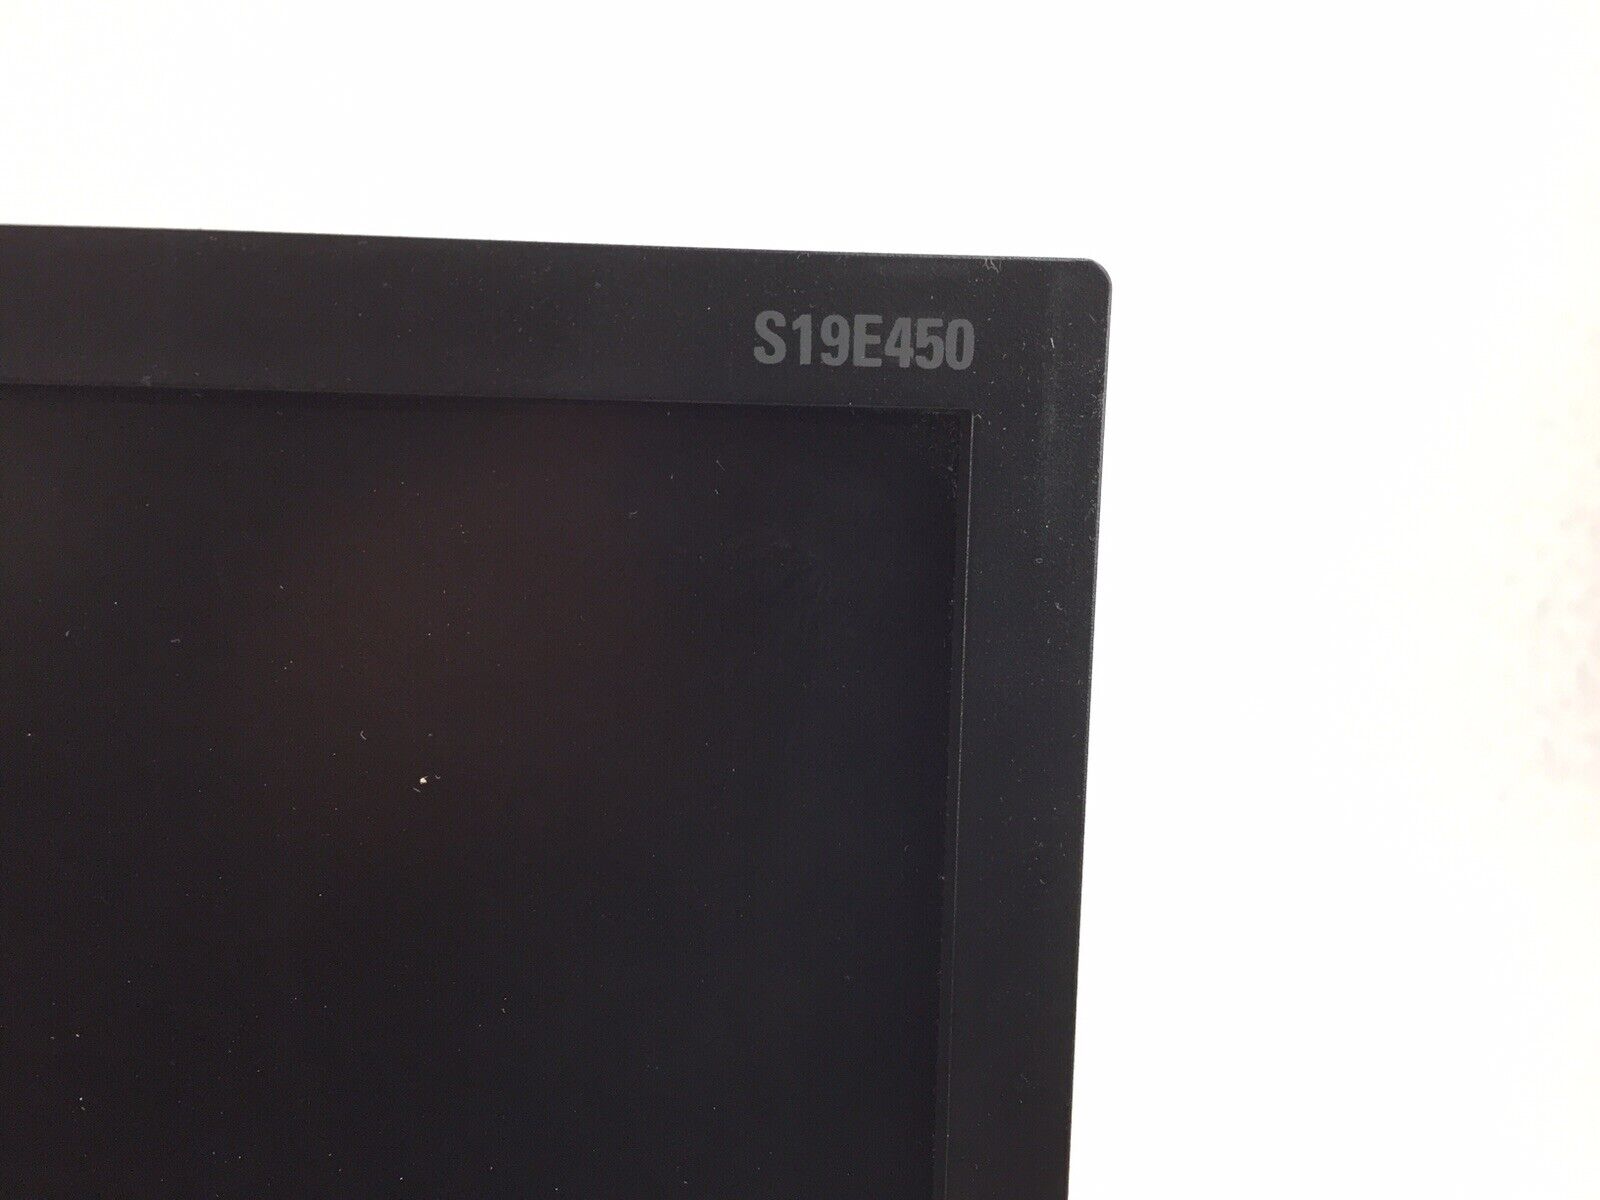 Samsung 19" SE450 Series LED Monitor S19E450BW 1440 x 900 pixels C Grade